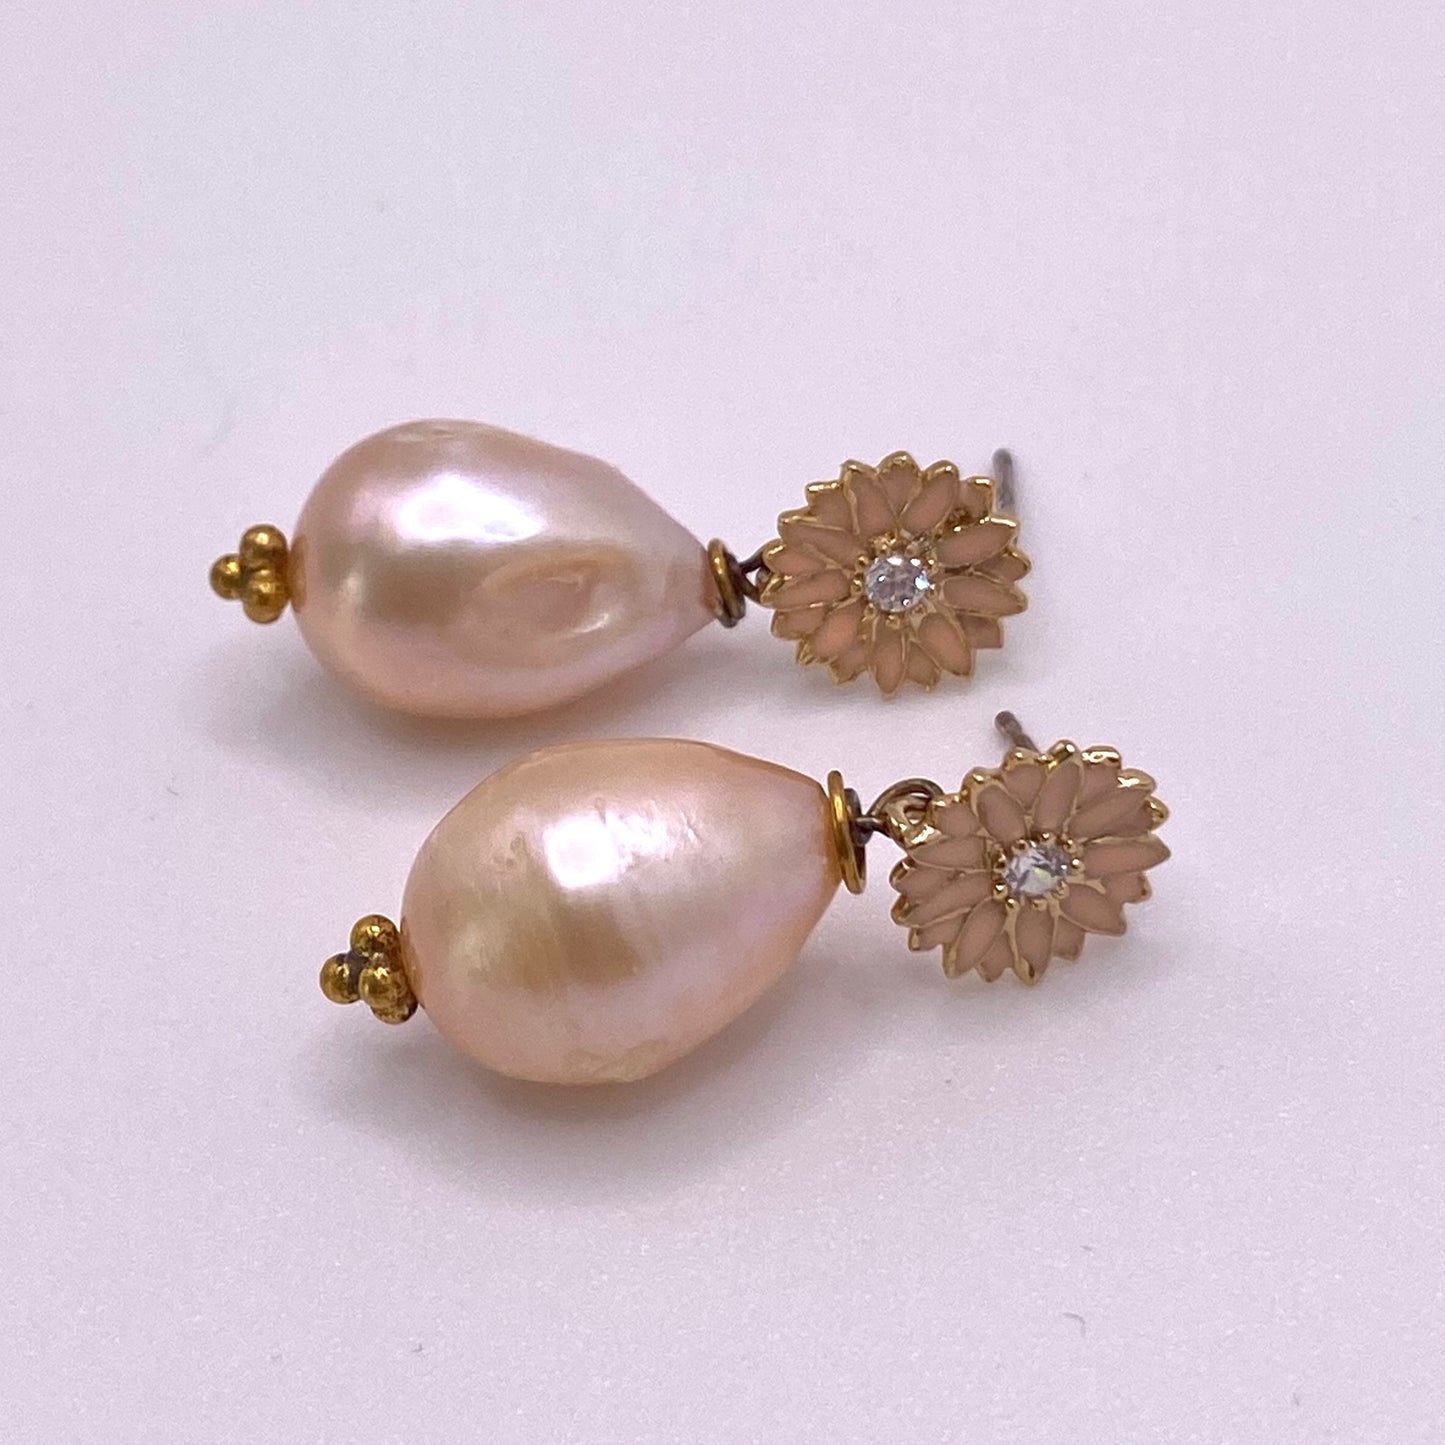 Rose Pearl and Flower Earrings